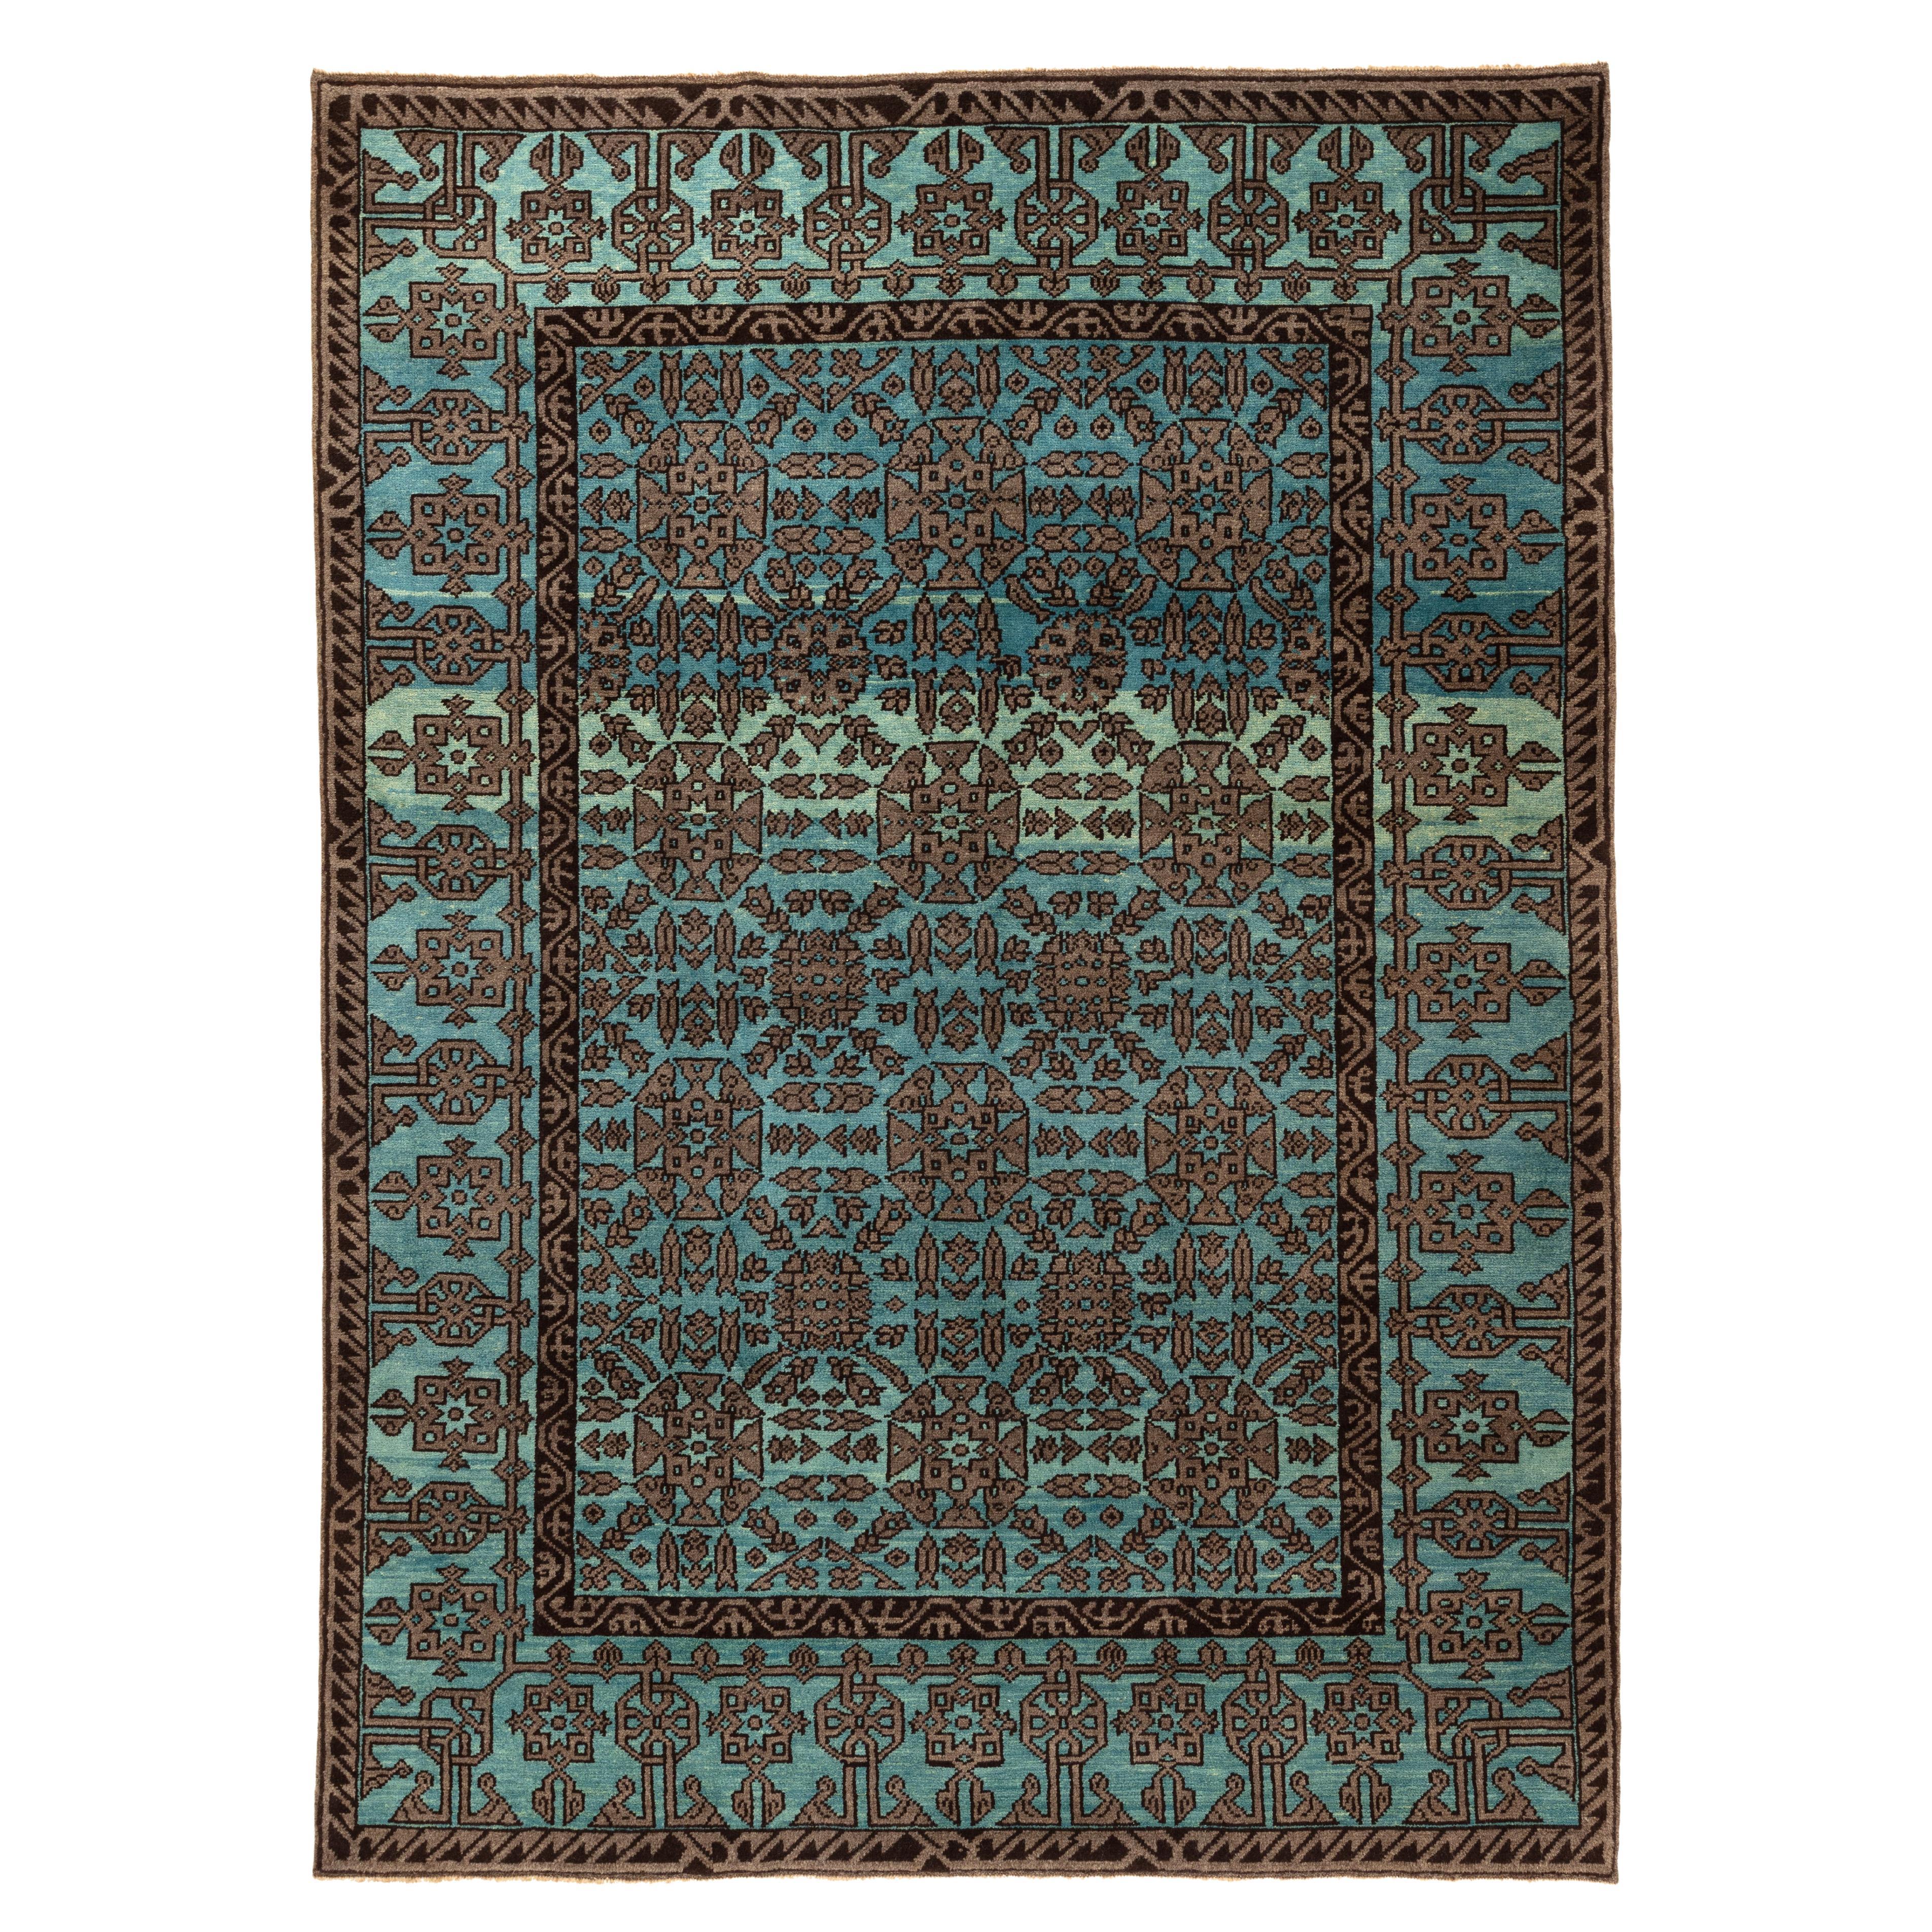 Ararat Rugs the Divrigi Ulu Mosque Carpet Anatolian Revival Rug, Natural Dyed For Sale